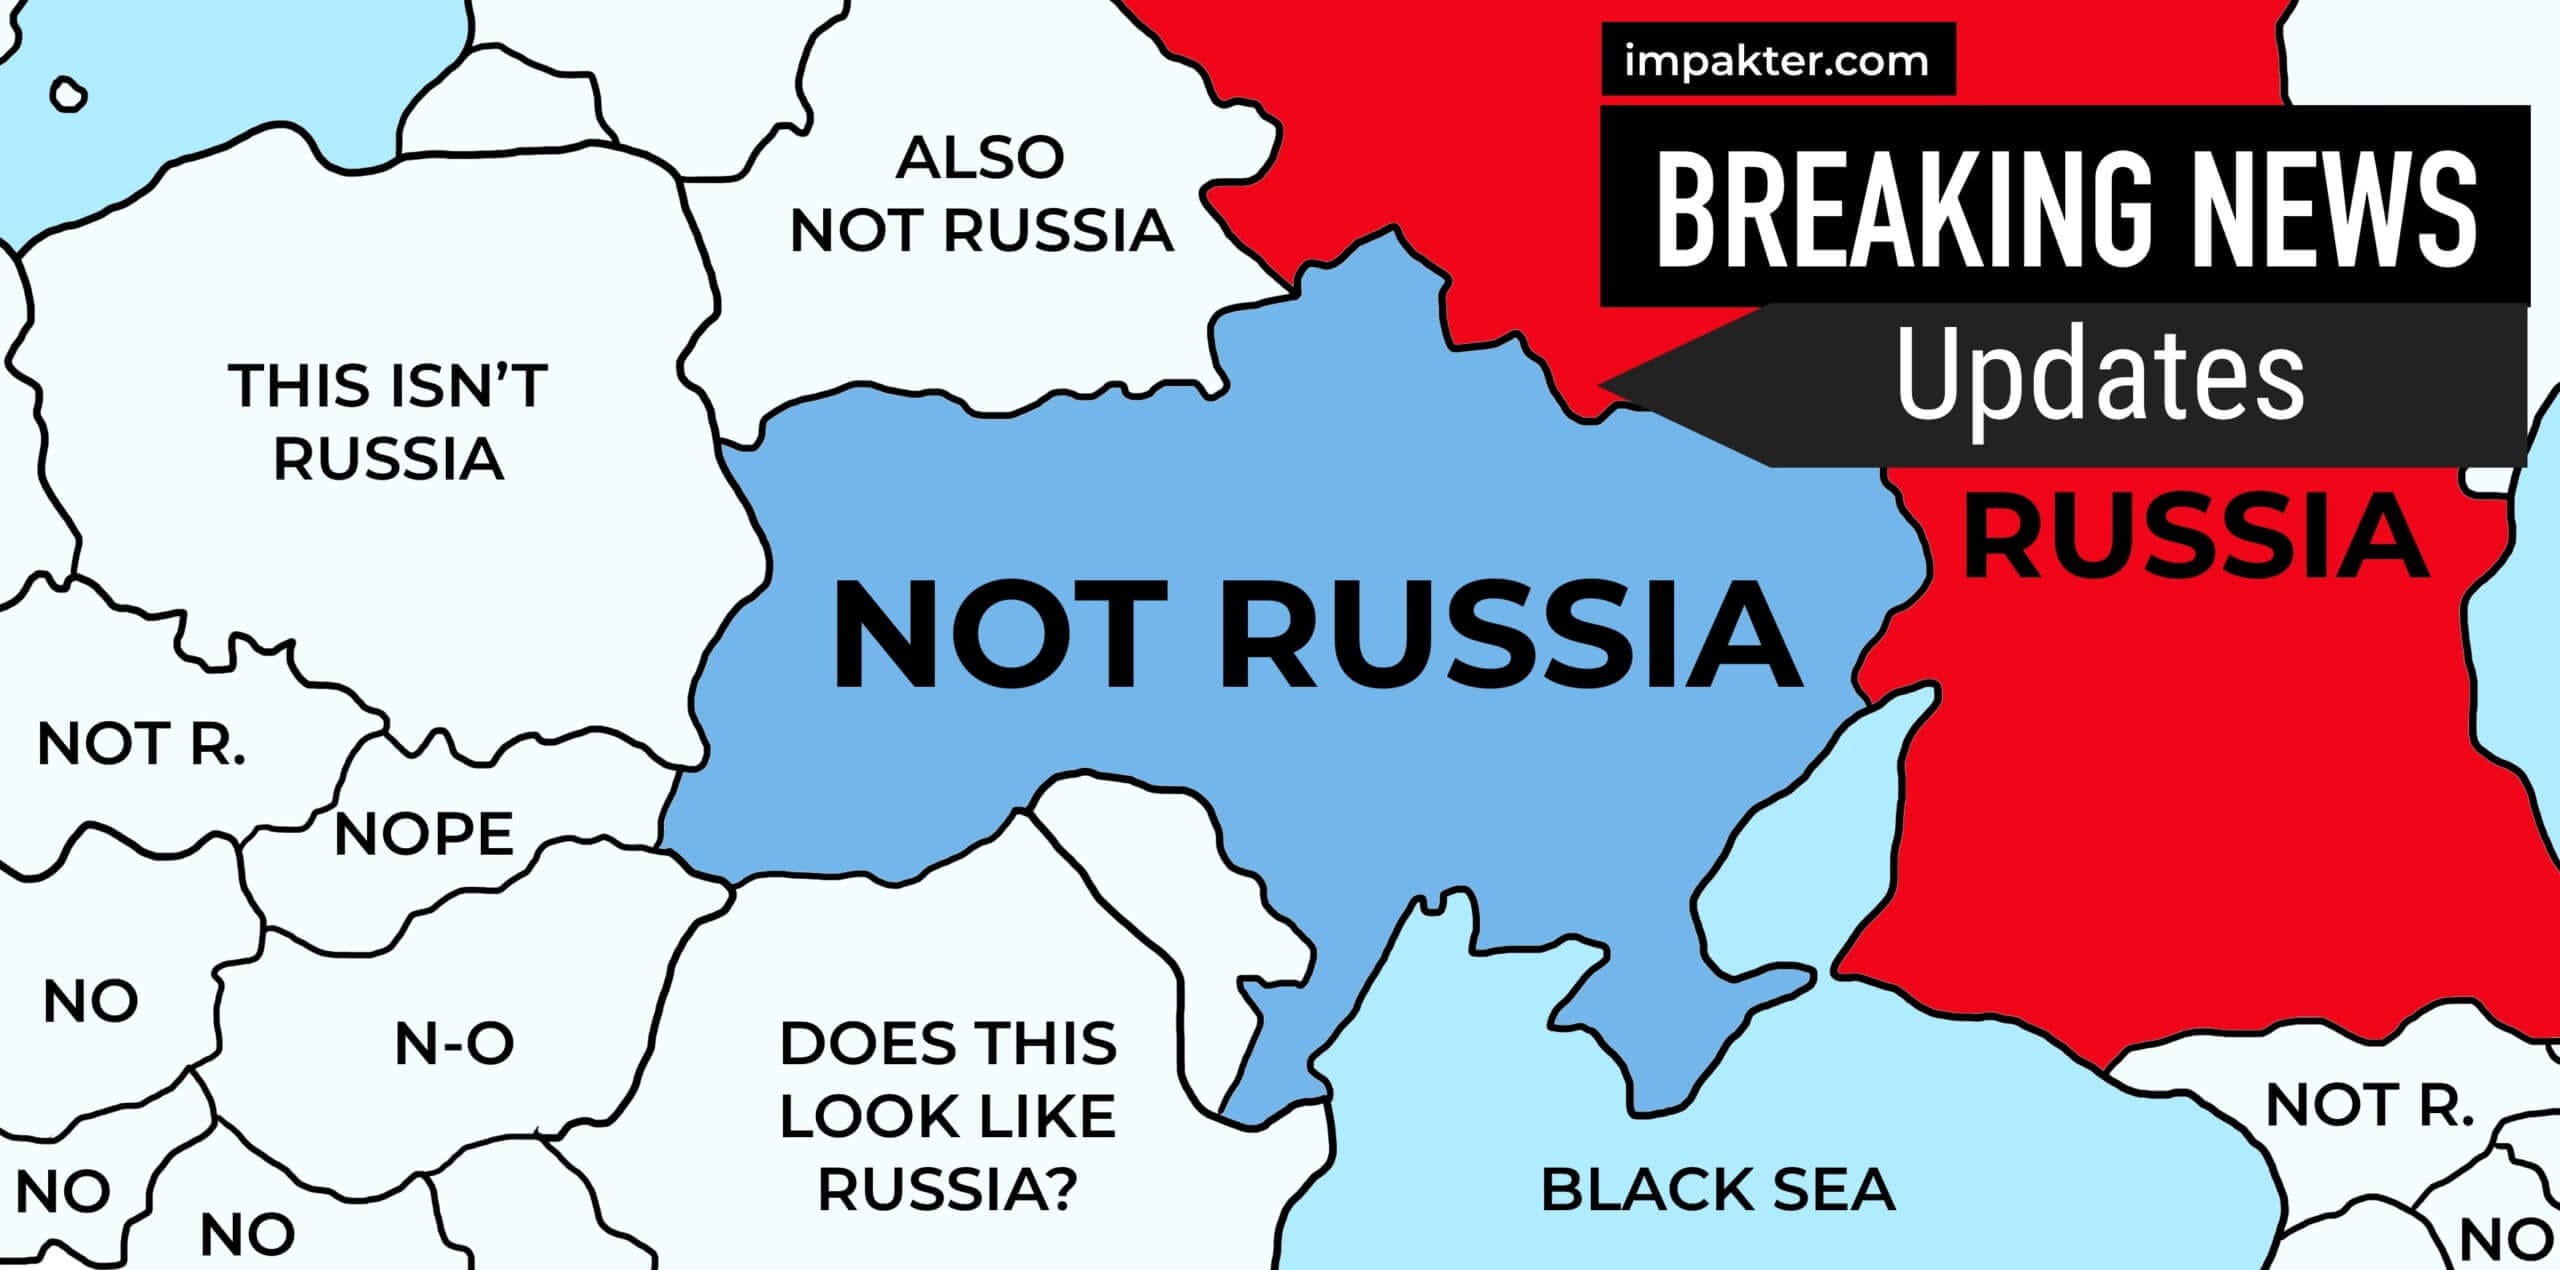 **LIVE UPDATES** UkraineRussia War The News as it Develops Impakter